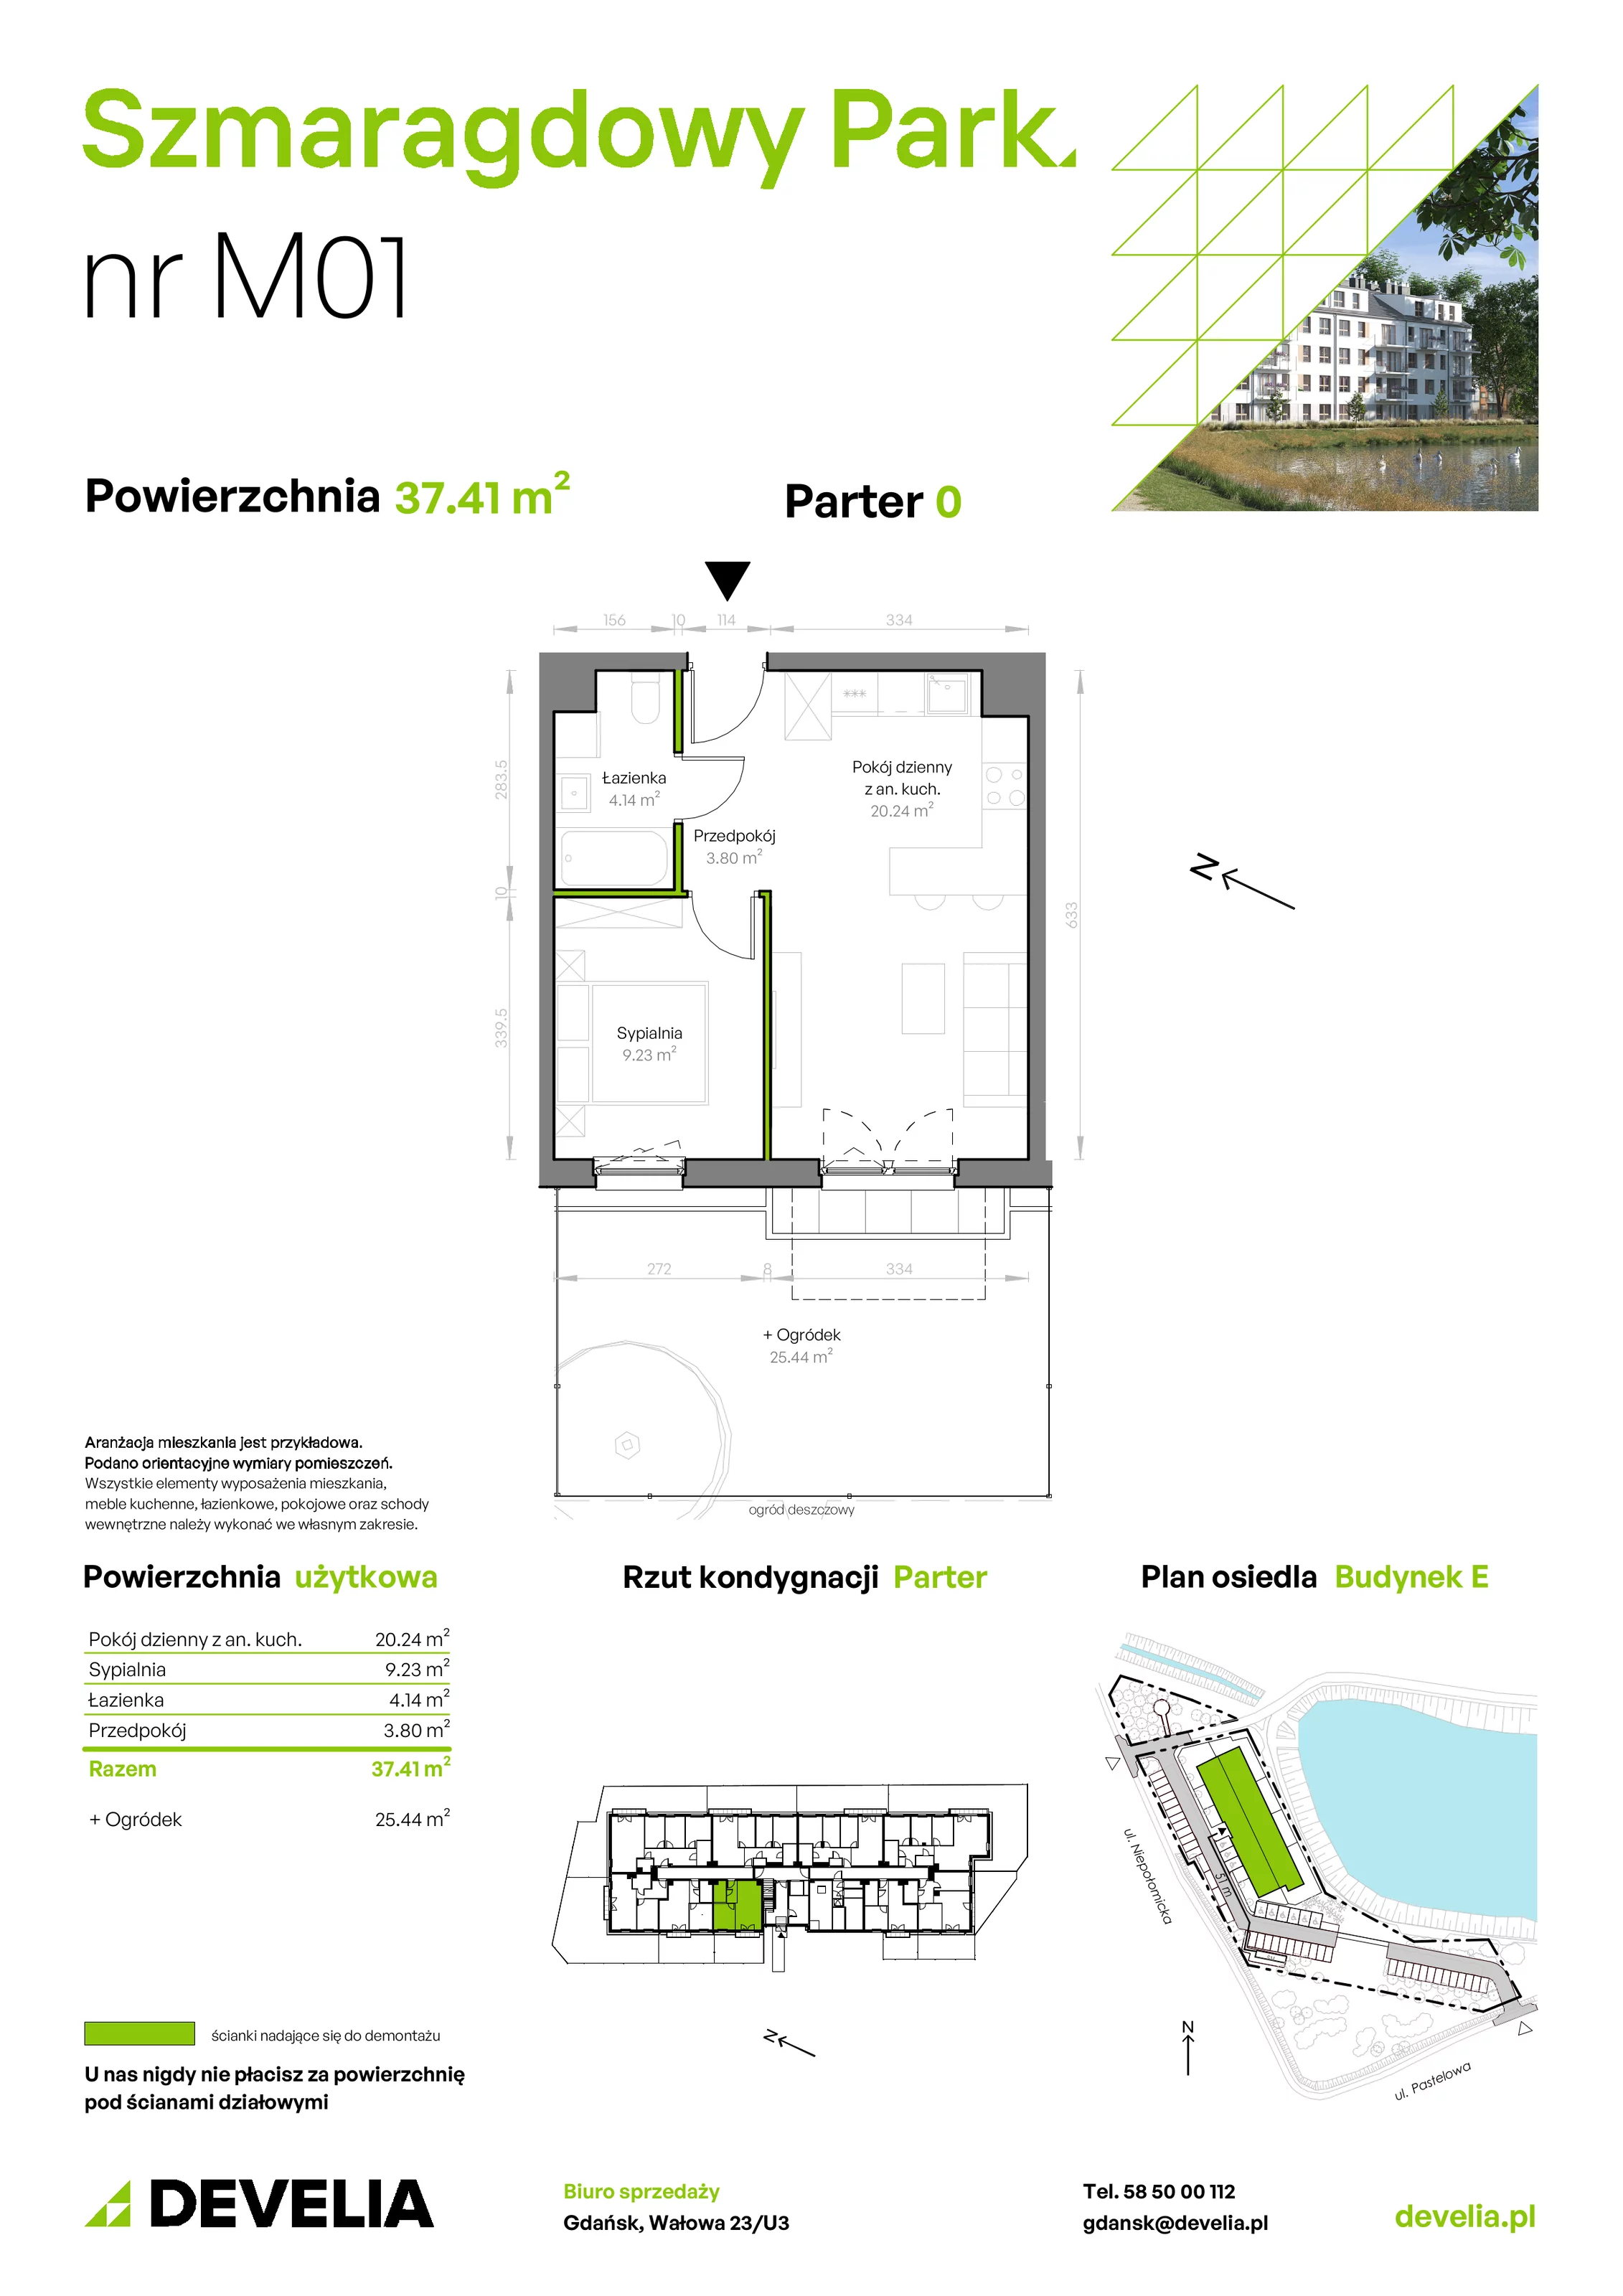 Mieszkanie 37,41 m², parter, oferta nr E/001, Szmaragdowy Park, Gdańsk, Orunia Górna-Gdańsk Południe, Łostowice, ul. Topazowa 2